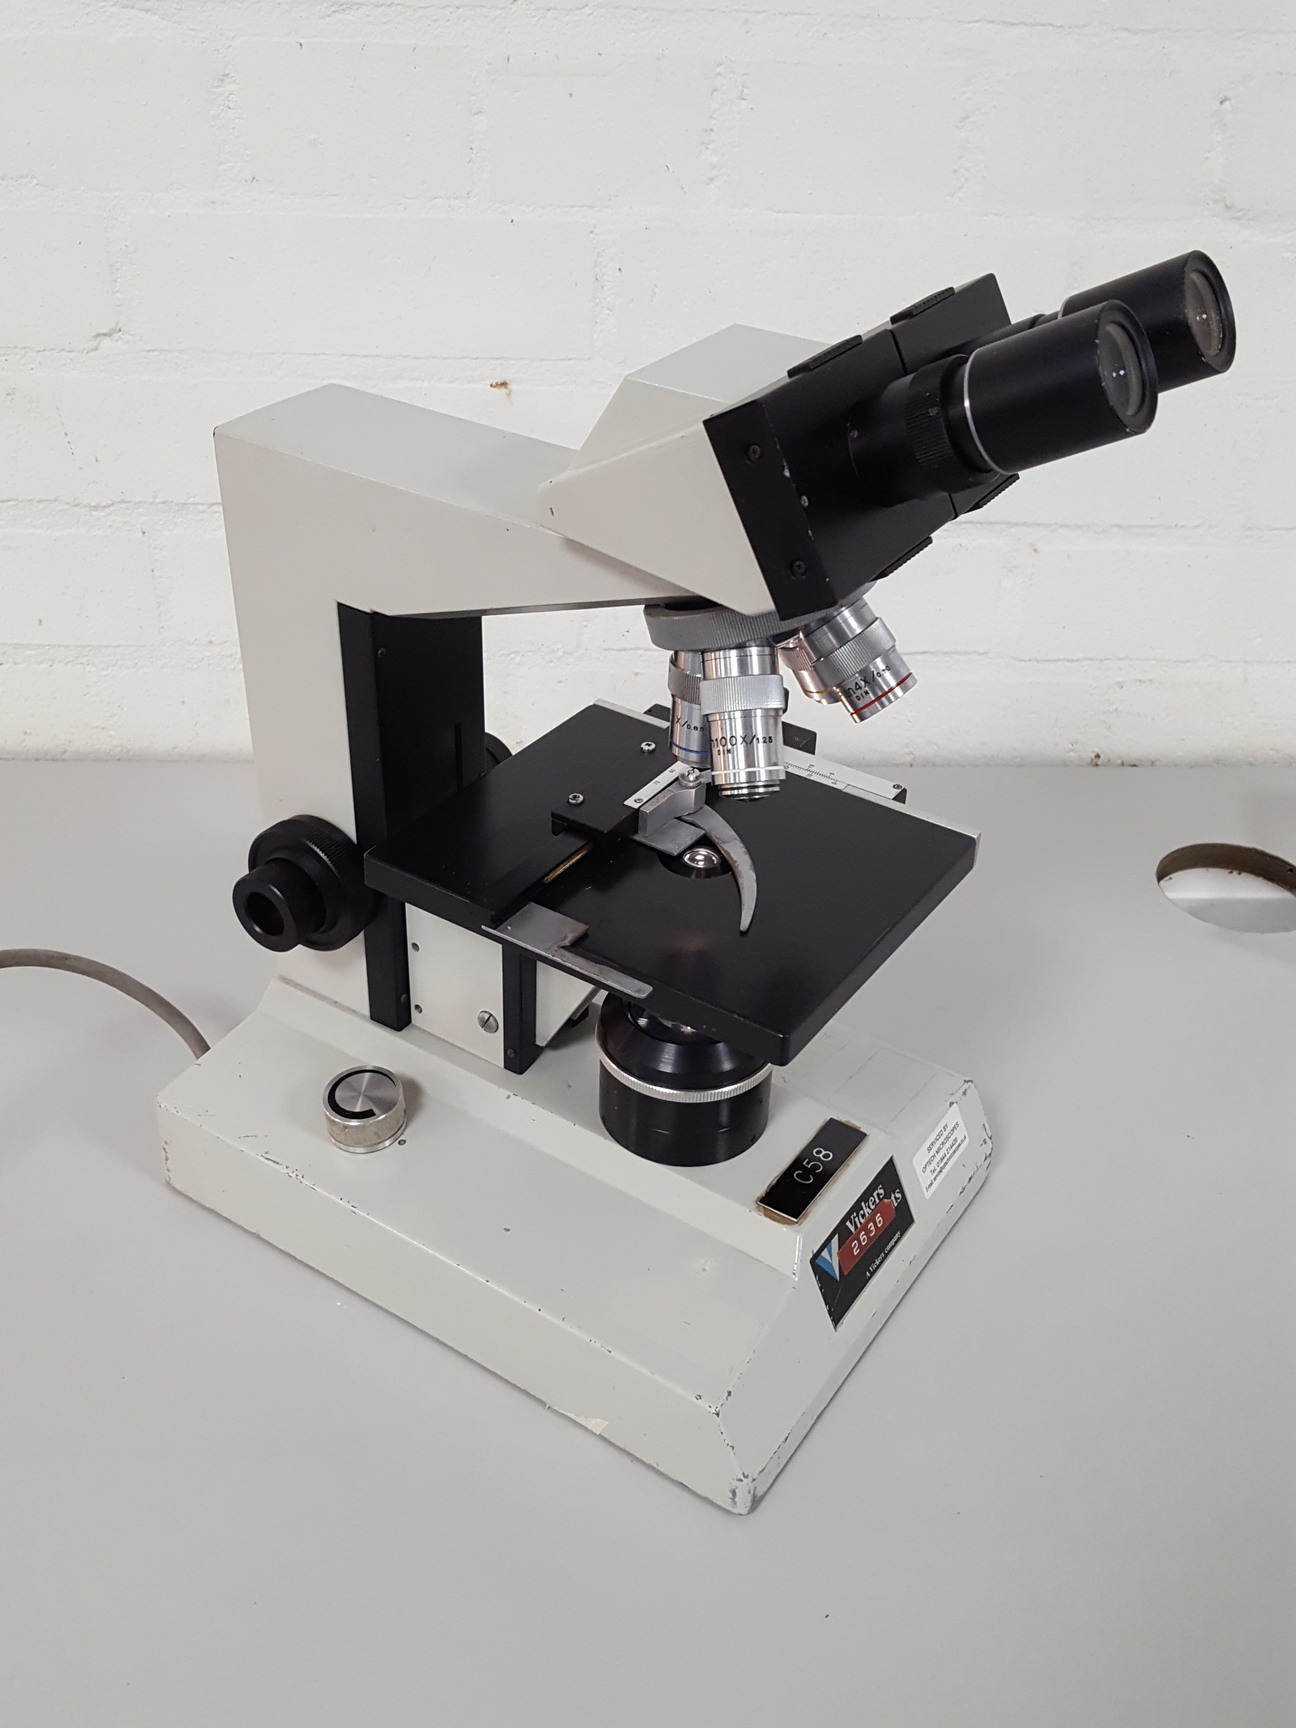 Vickers Instruments ML 1300 Microscope Splan 100x/1.25, 40x/0.65, 10x/0.25